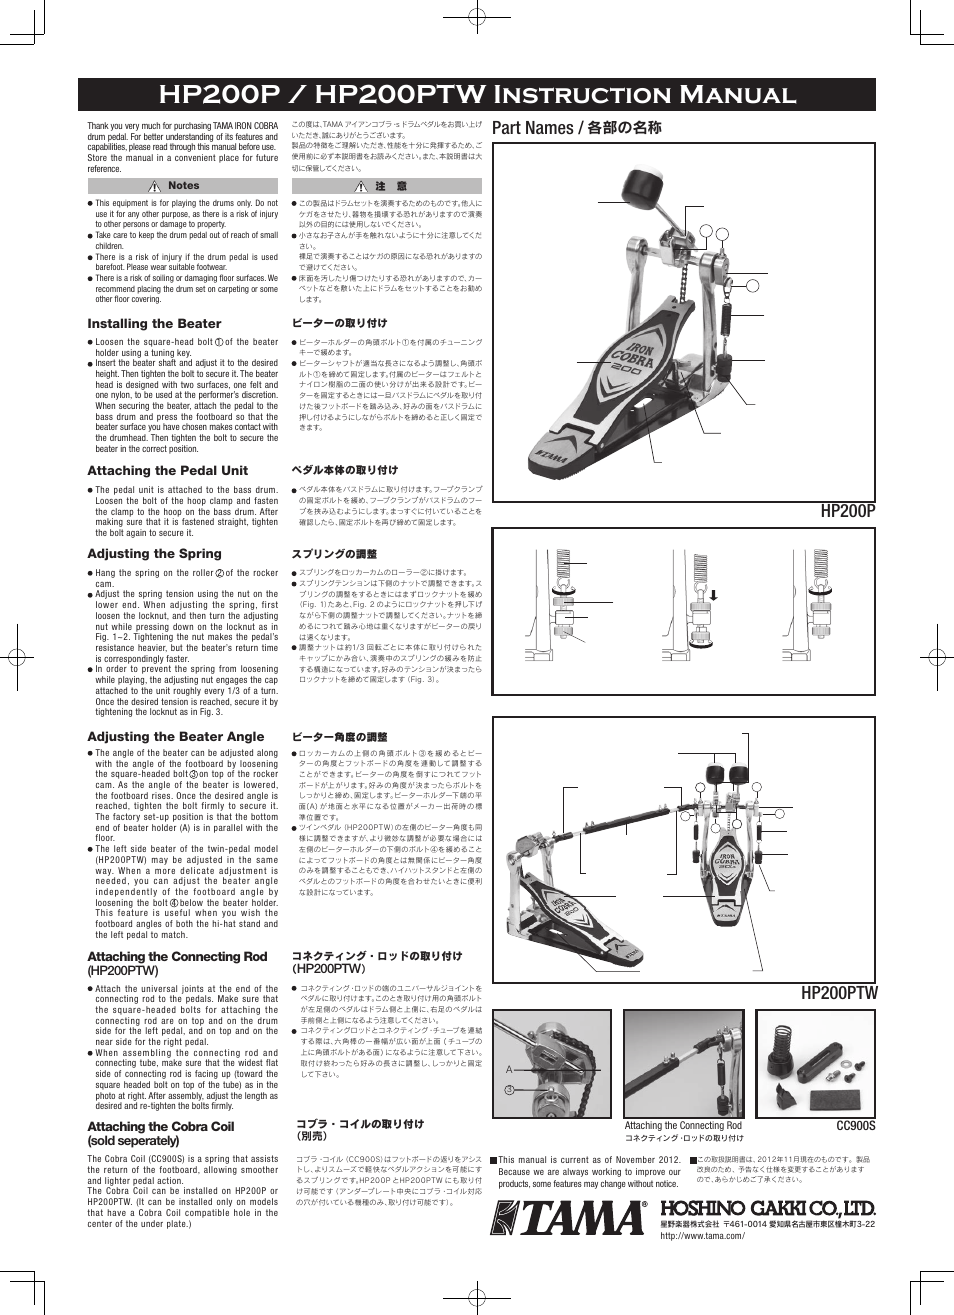 TAMA HP200P Iron Cobra 200 Drum Pedal User Manual | 1 page | Original mode